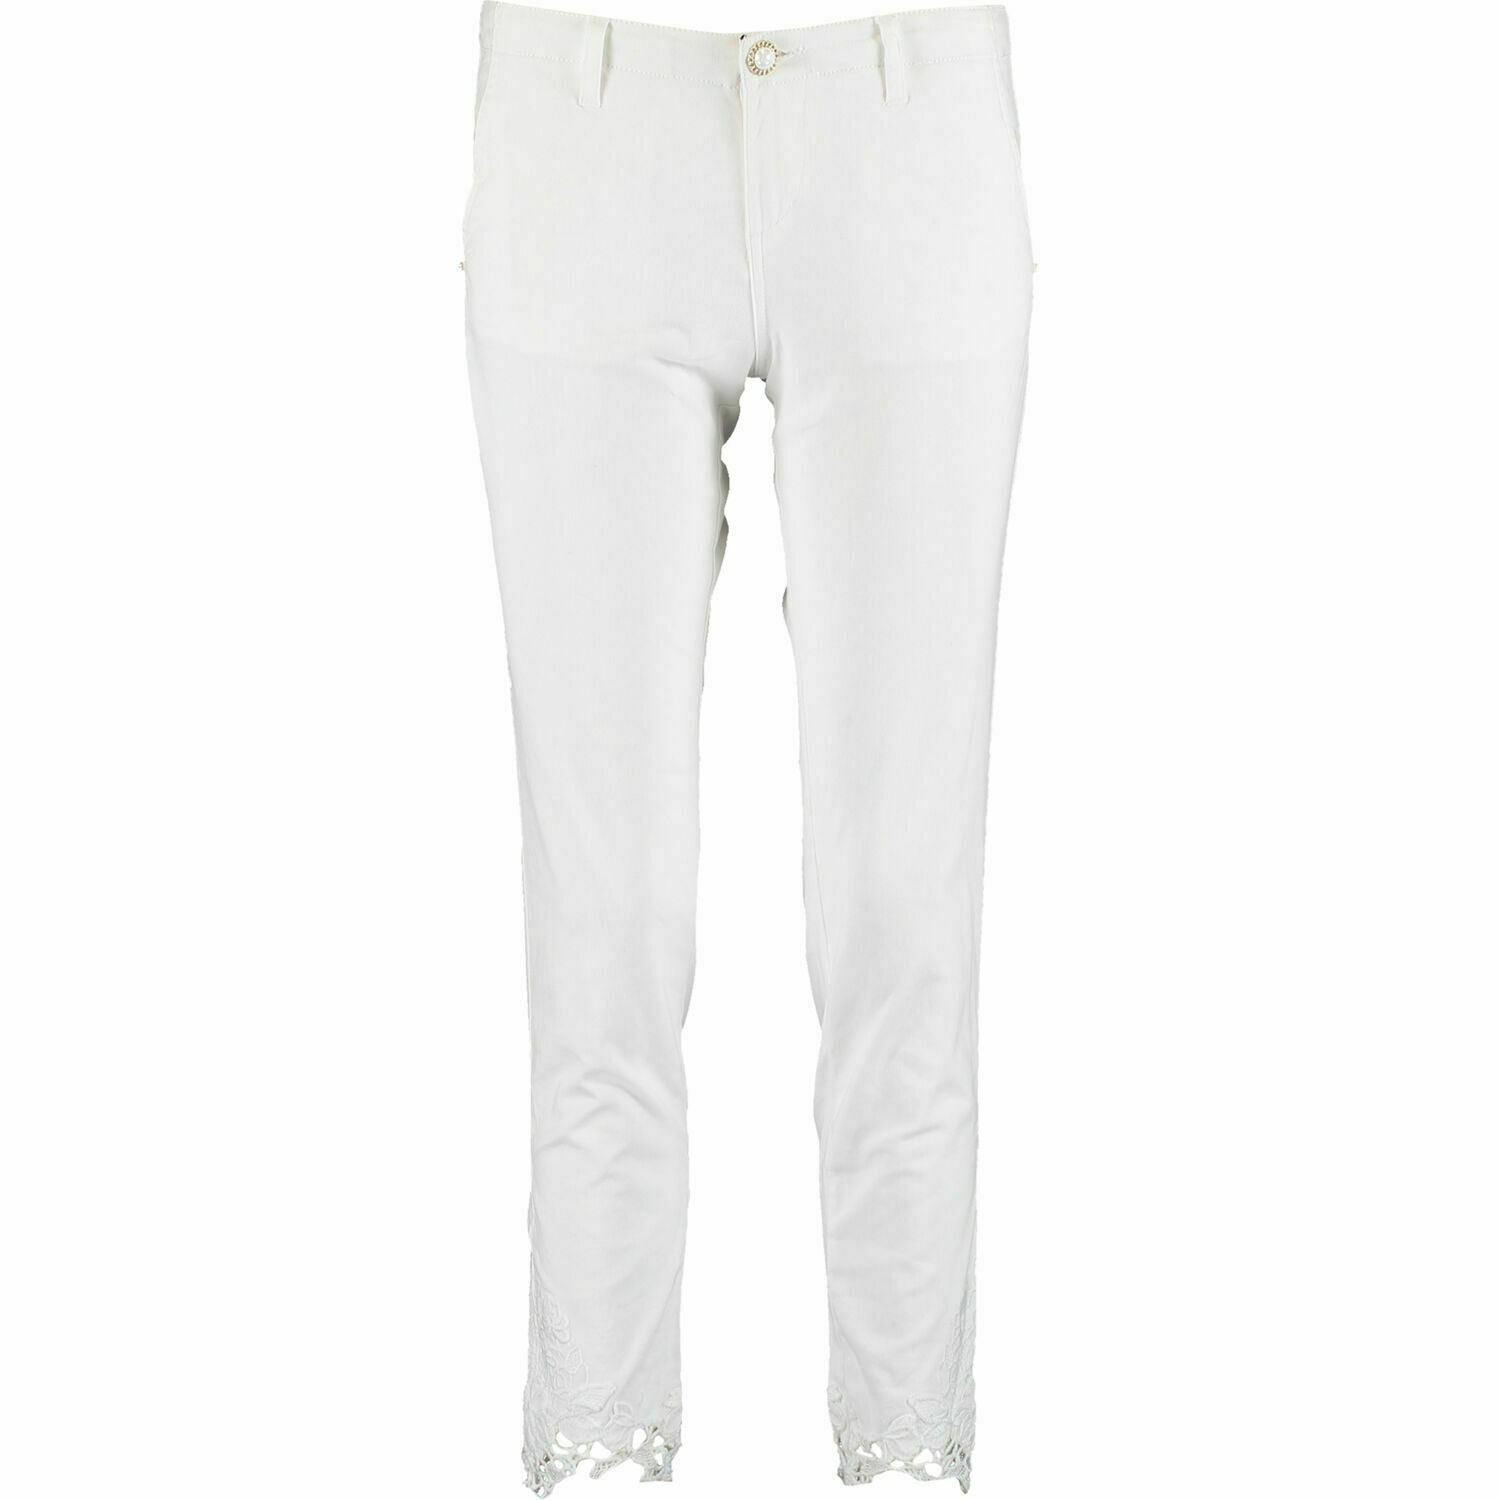 GUESS Womenâs Lace Hem Trousers Pants, White, size W28